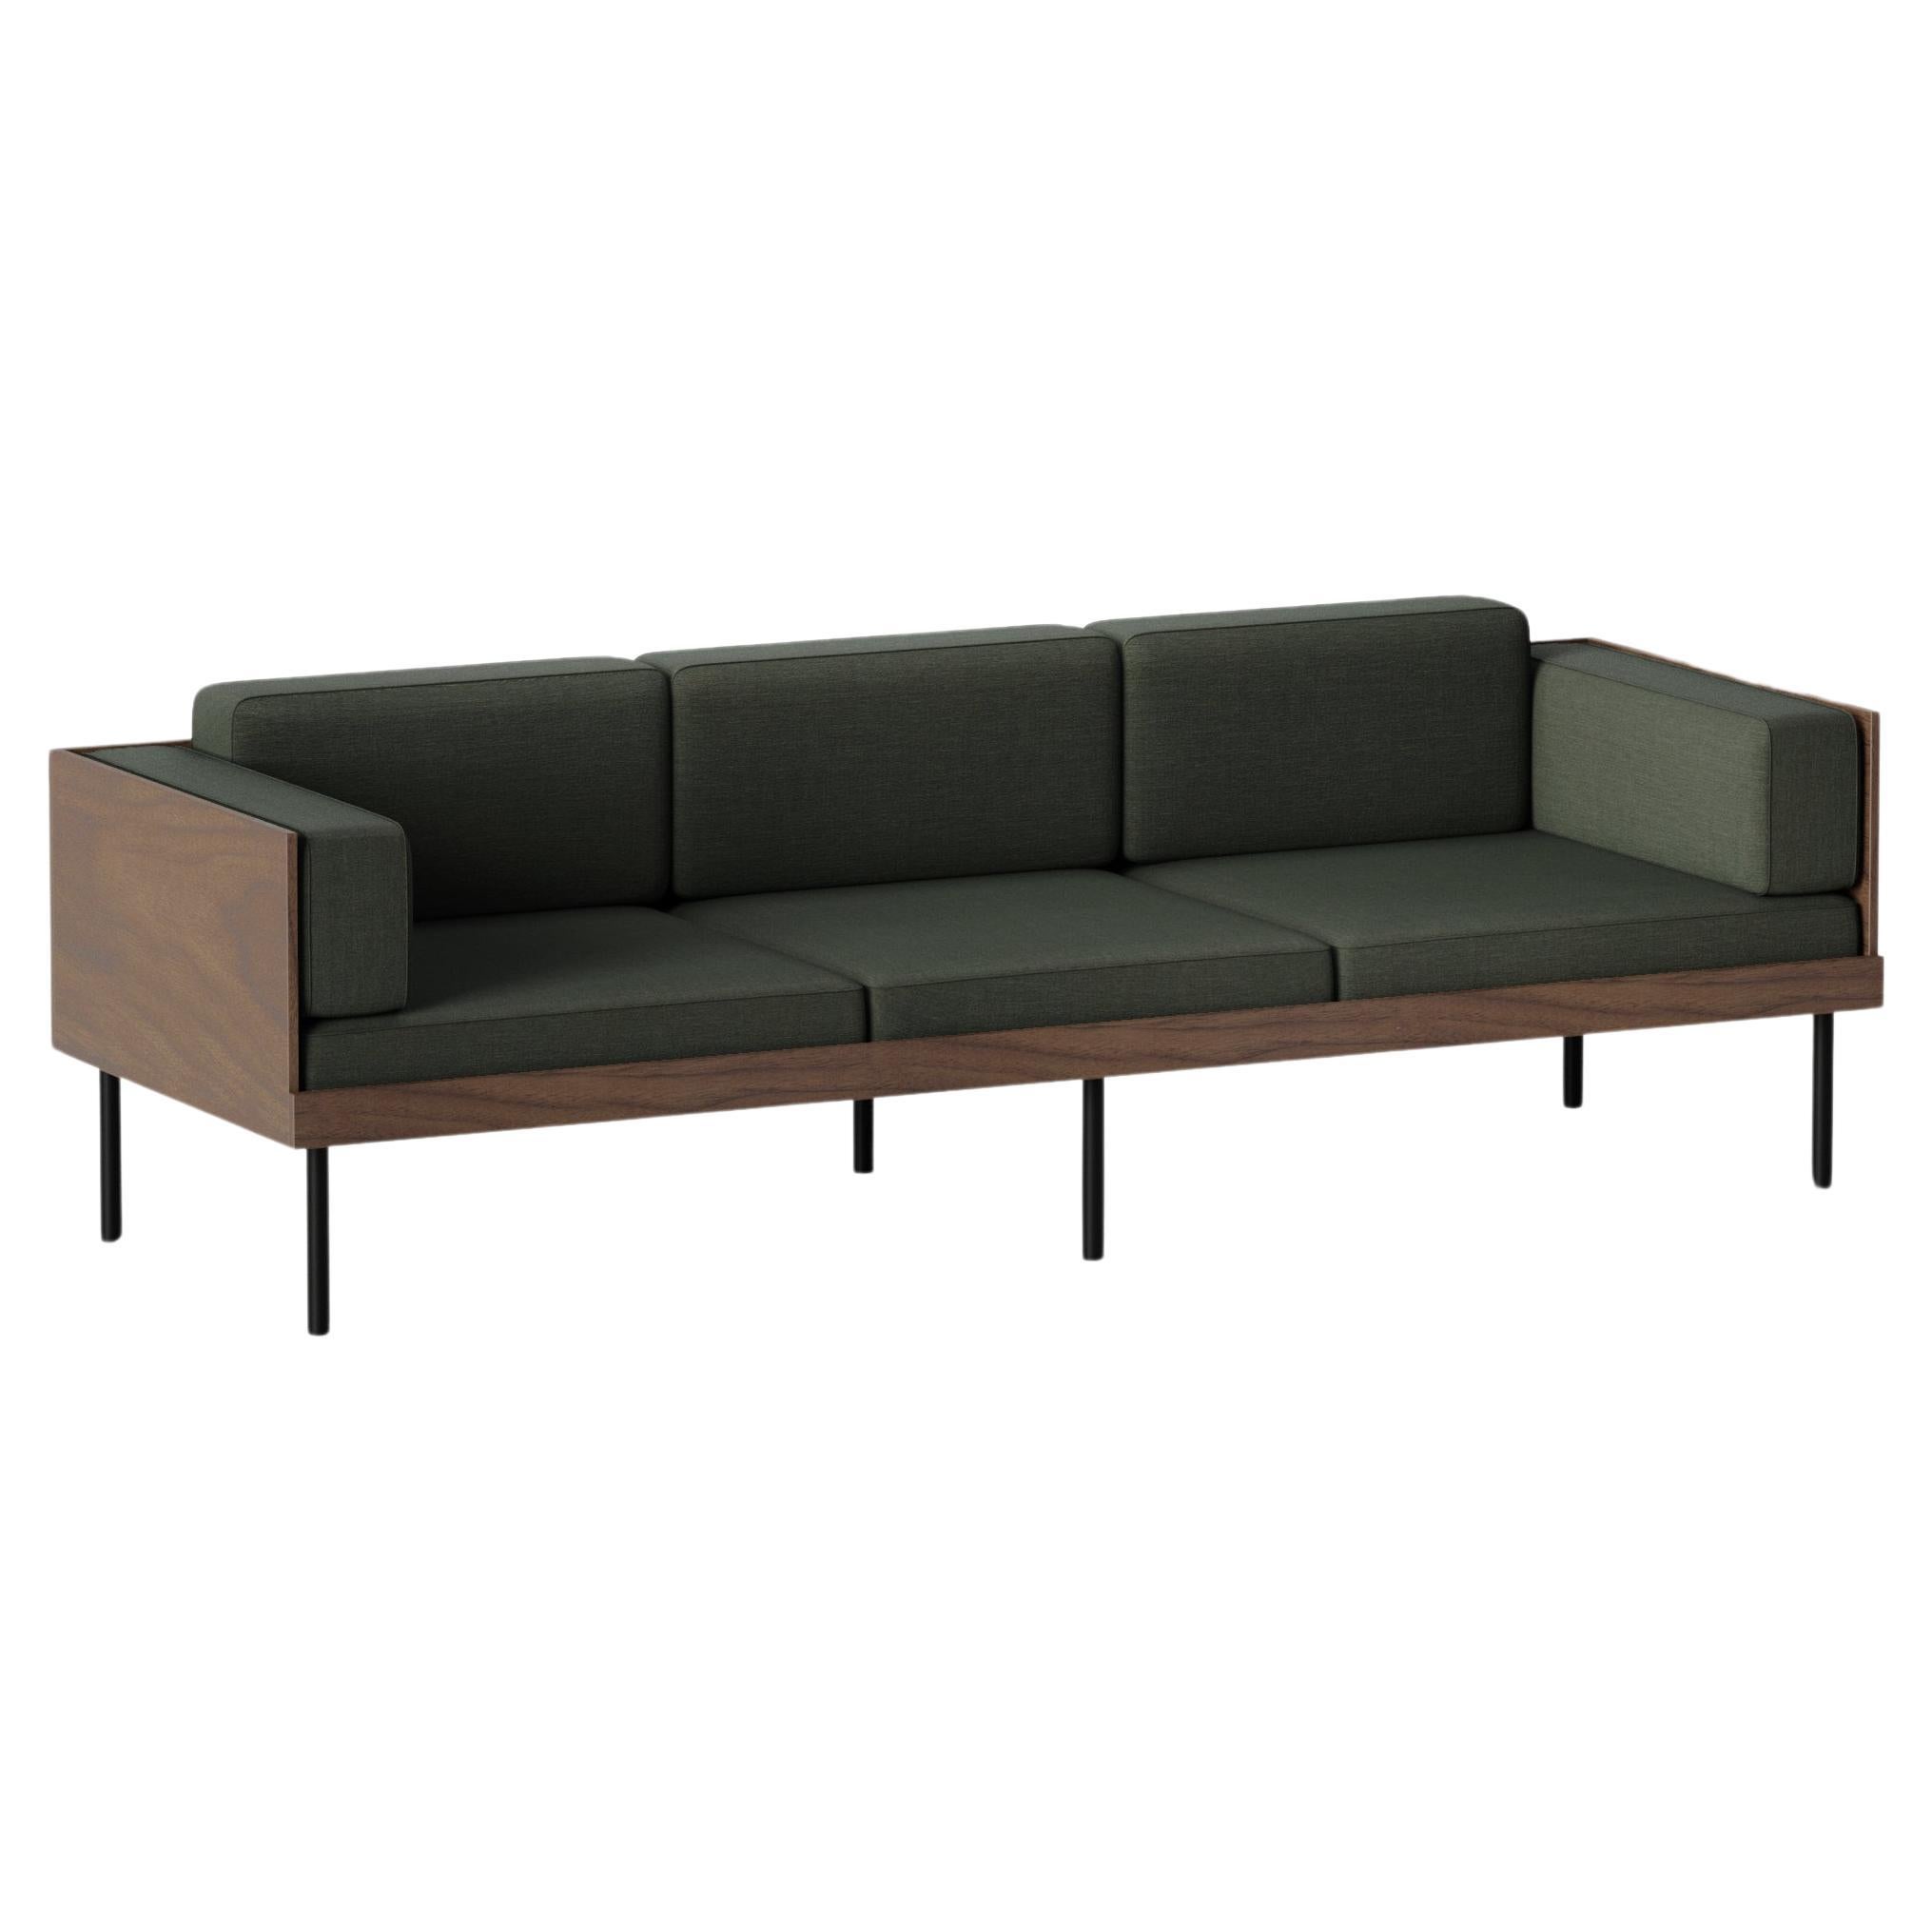 Dusty Green Cut Sofa by Kann Design For Sale